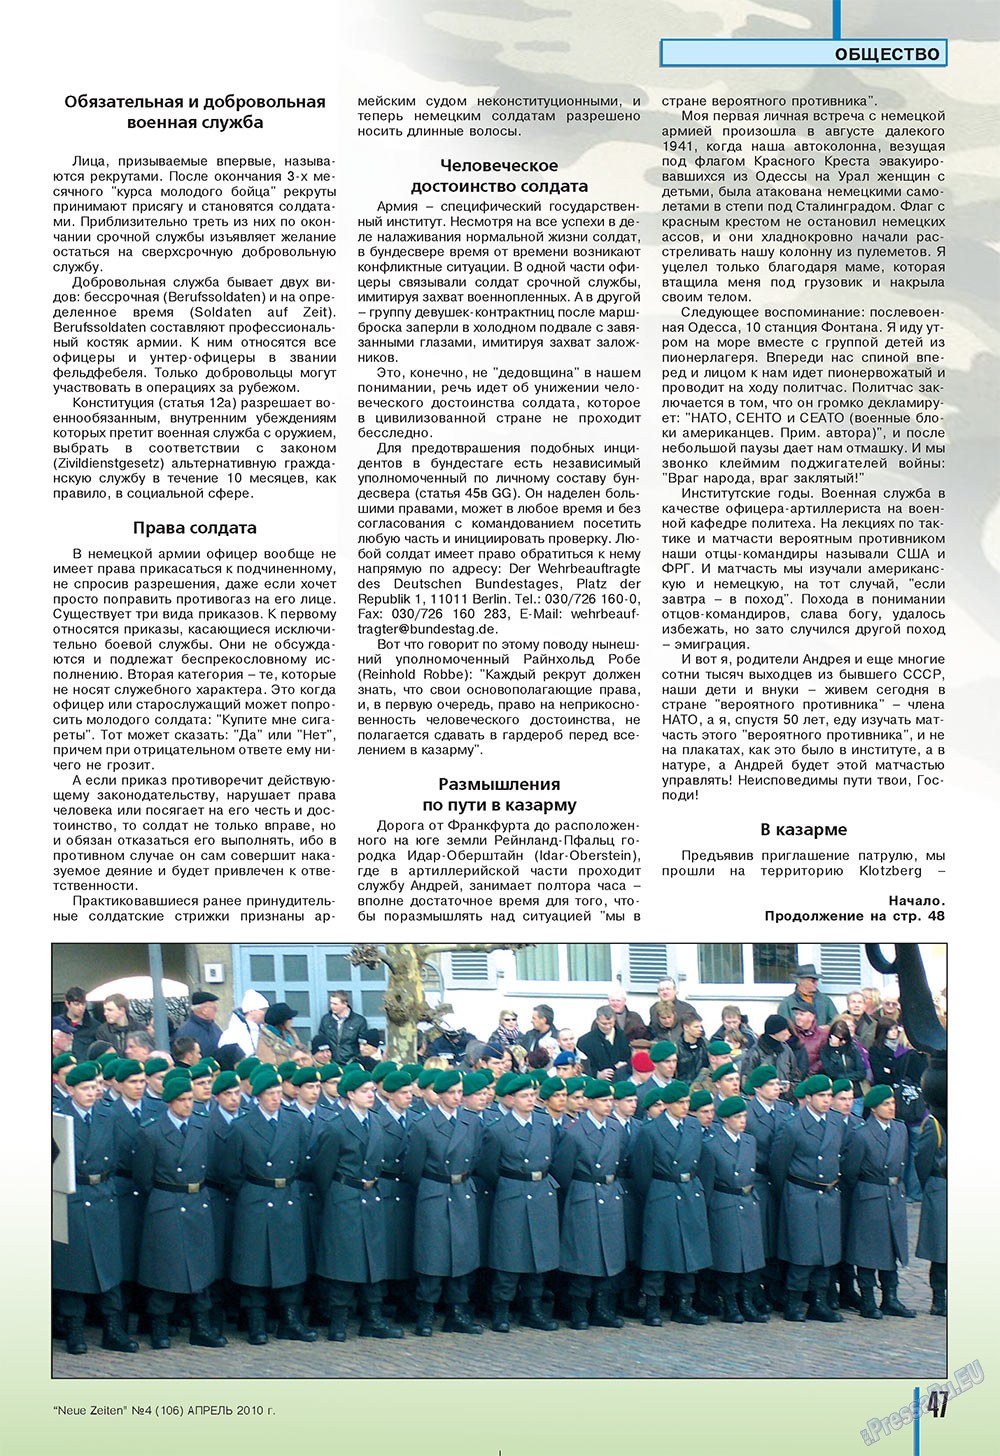 Neue Zeiten (журнал). 2010 год, номер 4, стр. 47